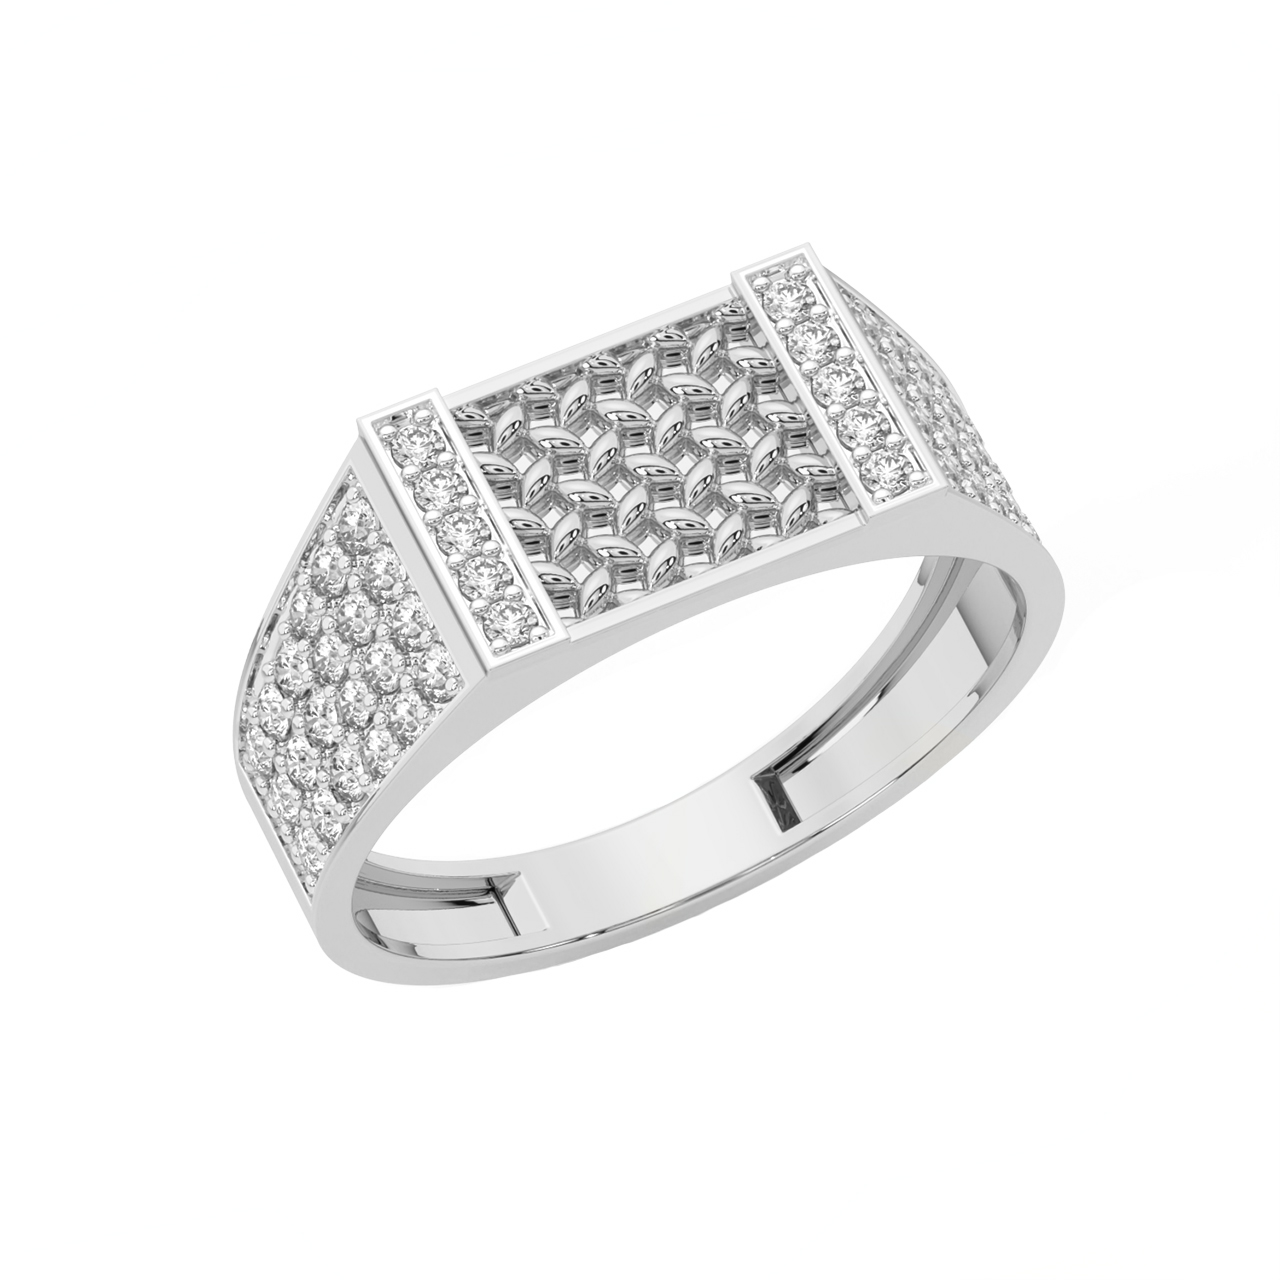 Buy Tyee Round Diamond Engagement Ring For Men Online